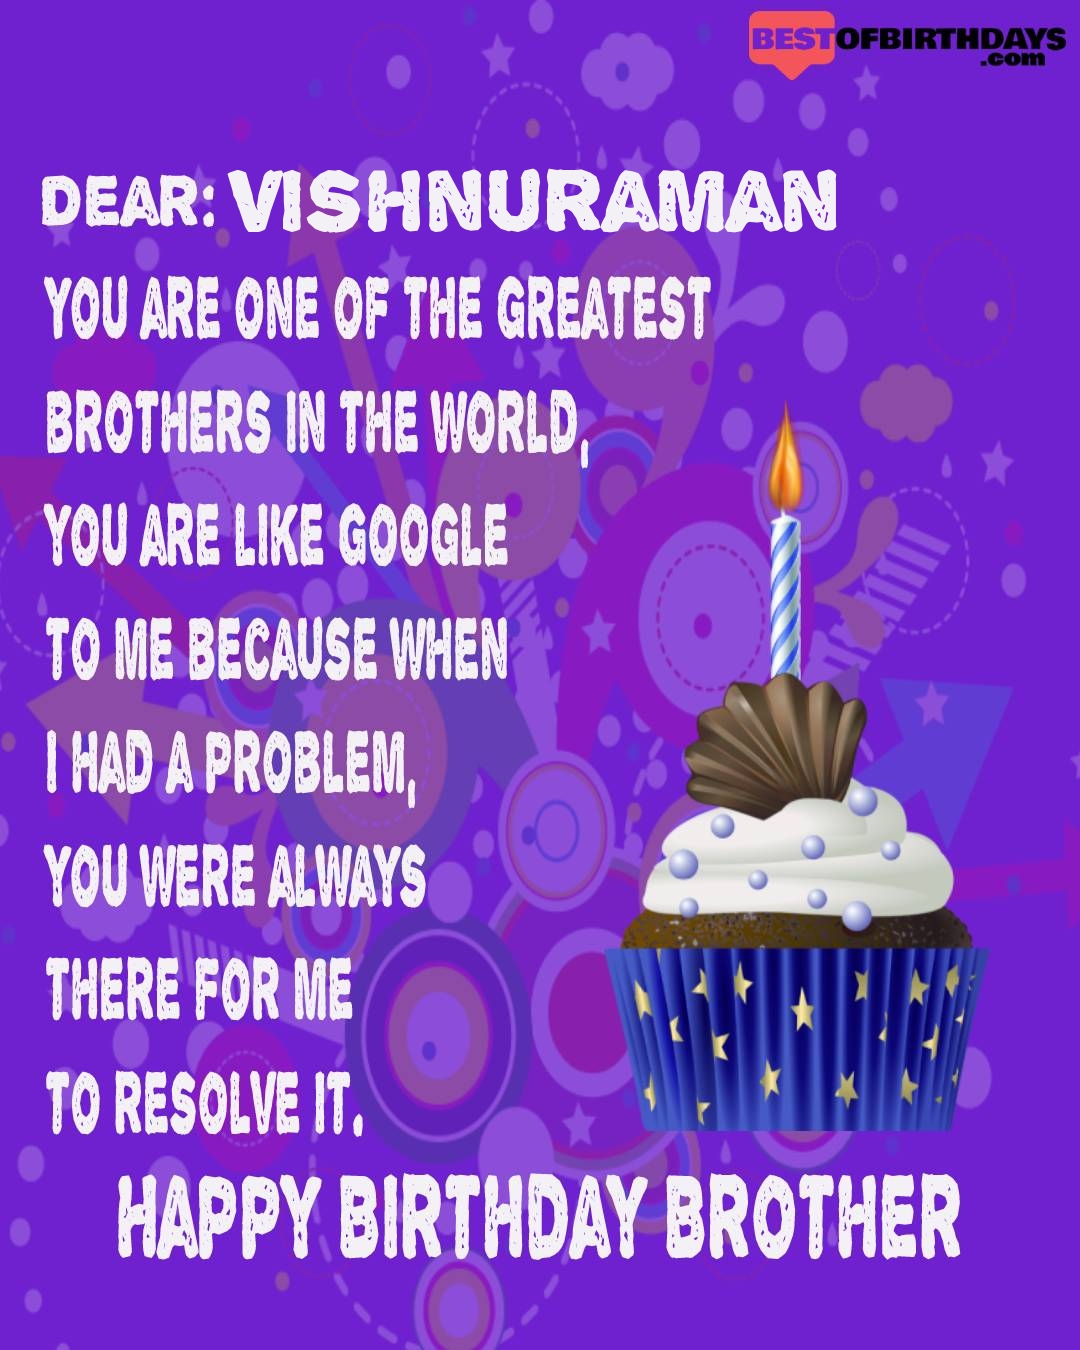 Happy birthday vishnuraman bhai brother bro